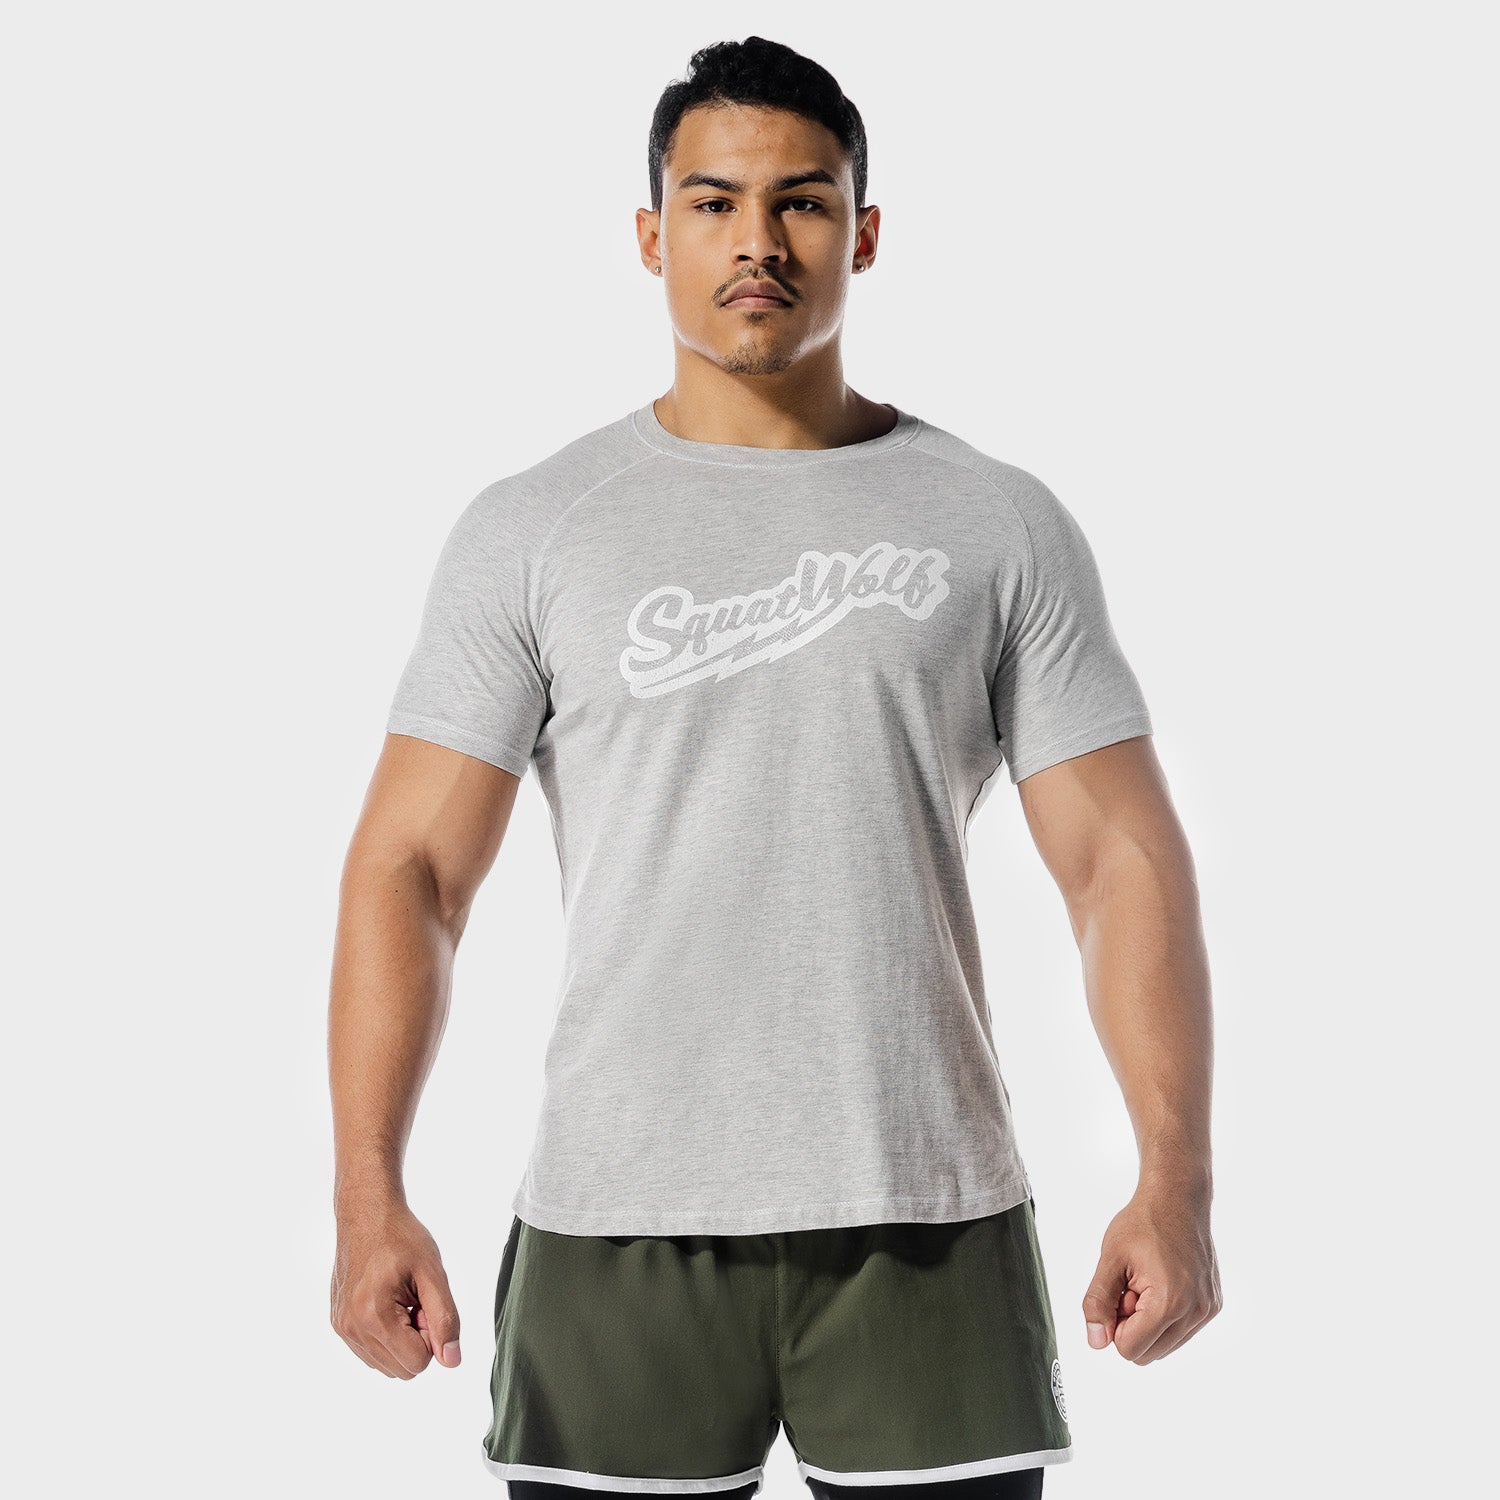 squatwolf-gym-t-shirts-golden-era-one-up-t-shirt-light-grey-marl-workout-clothes-for-men